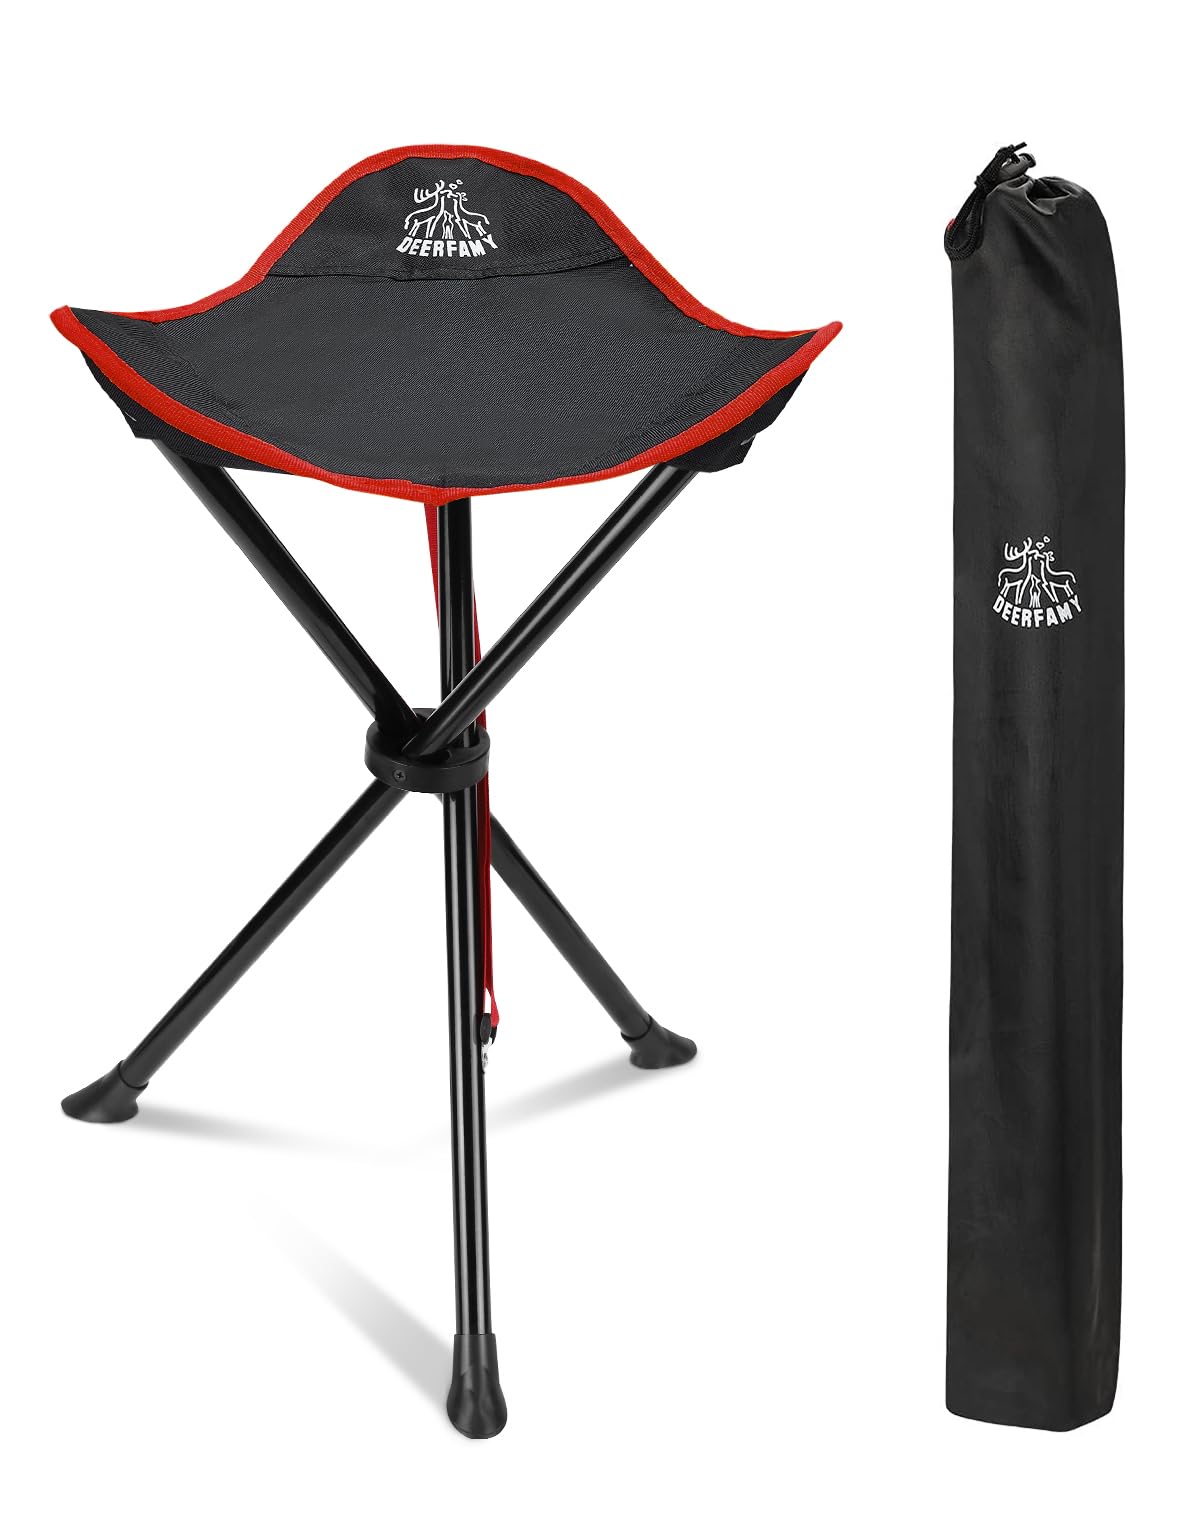 DEERFAMY Folding Camping Tripod Stools, Portable 3 Legs Tall Slacker Chair Tripod Seat for Outdoor Hiking Hunting Fishing Picnic